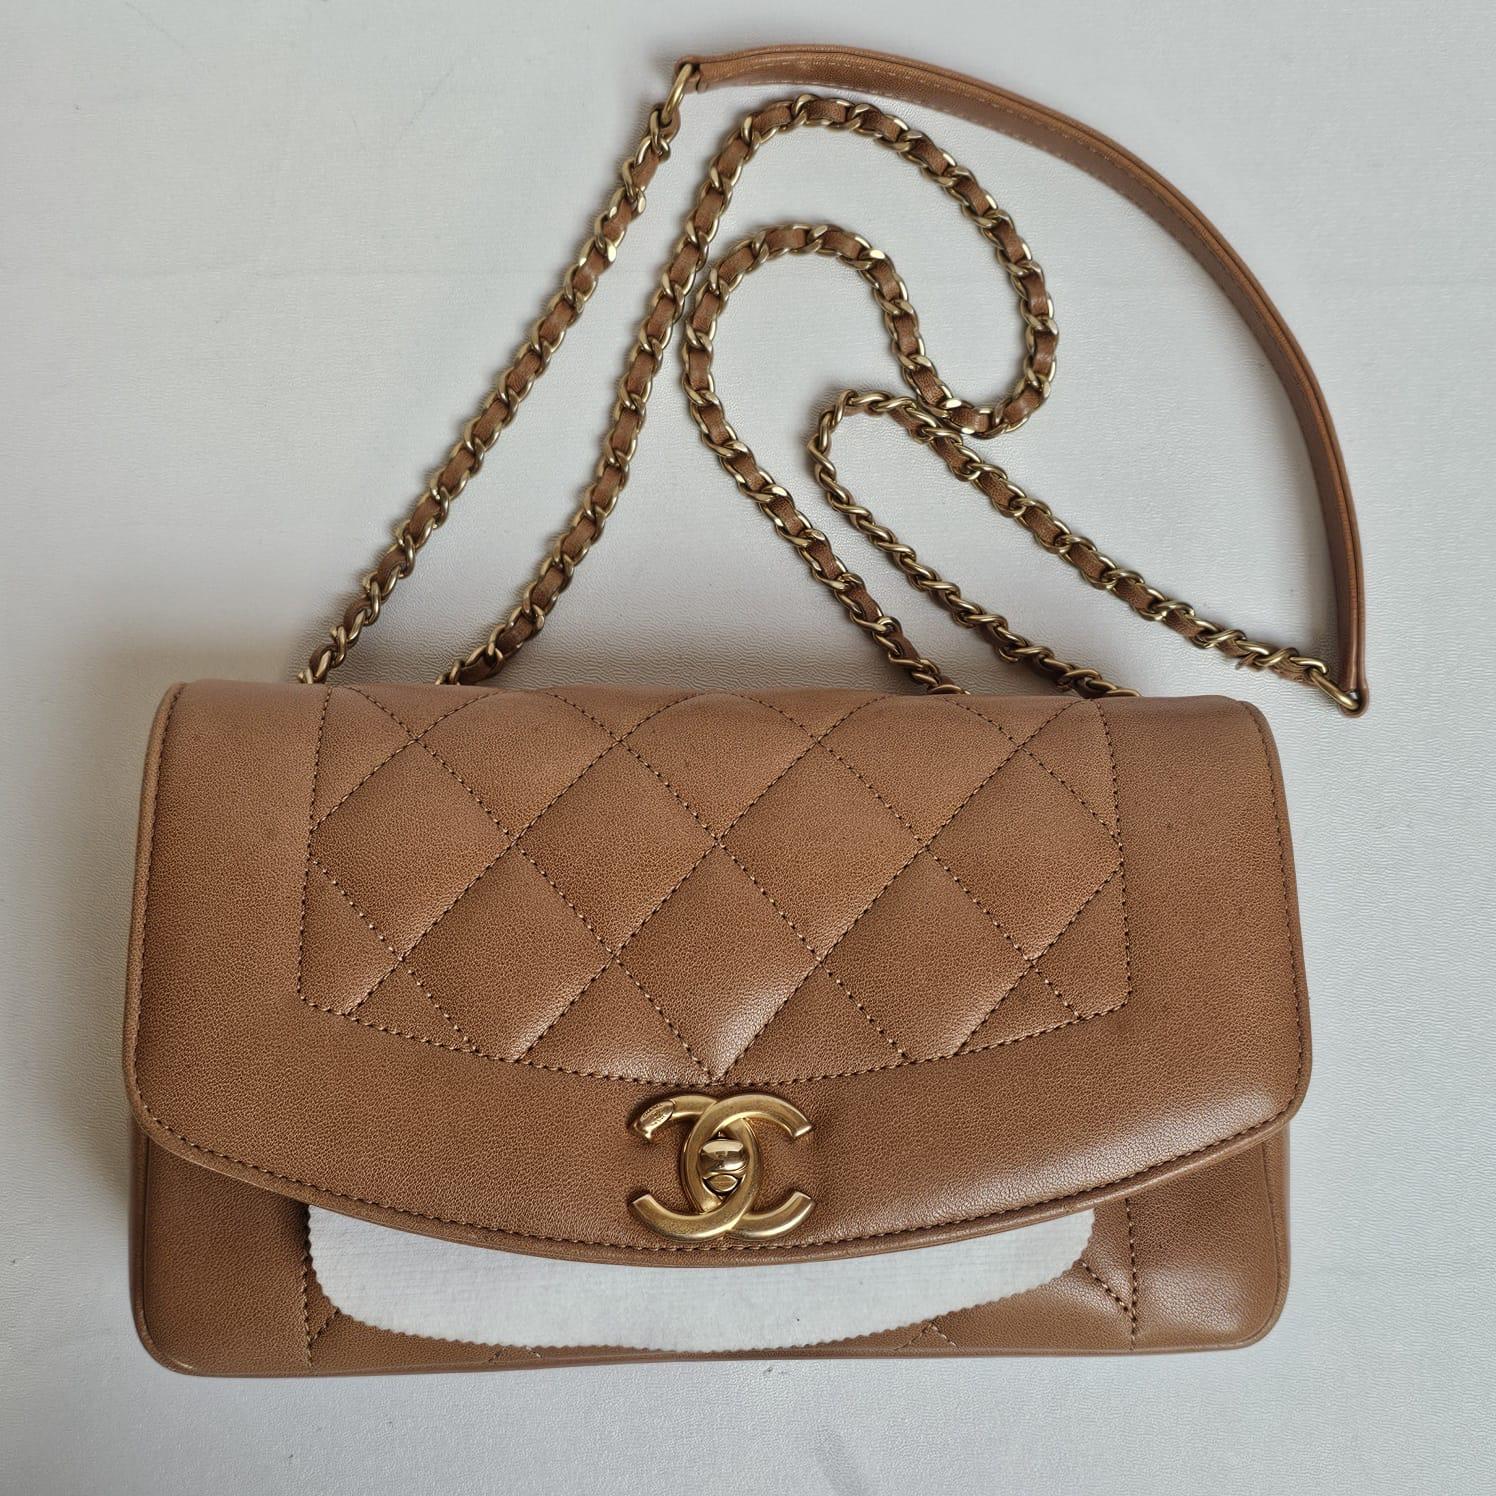 2014-2015 Chanel Caramel Diana Flap Bag For Sale 4